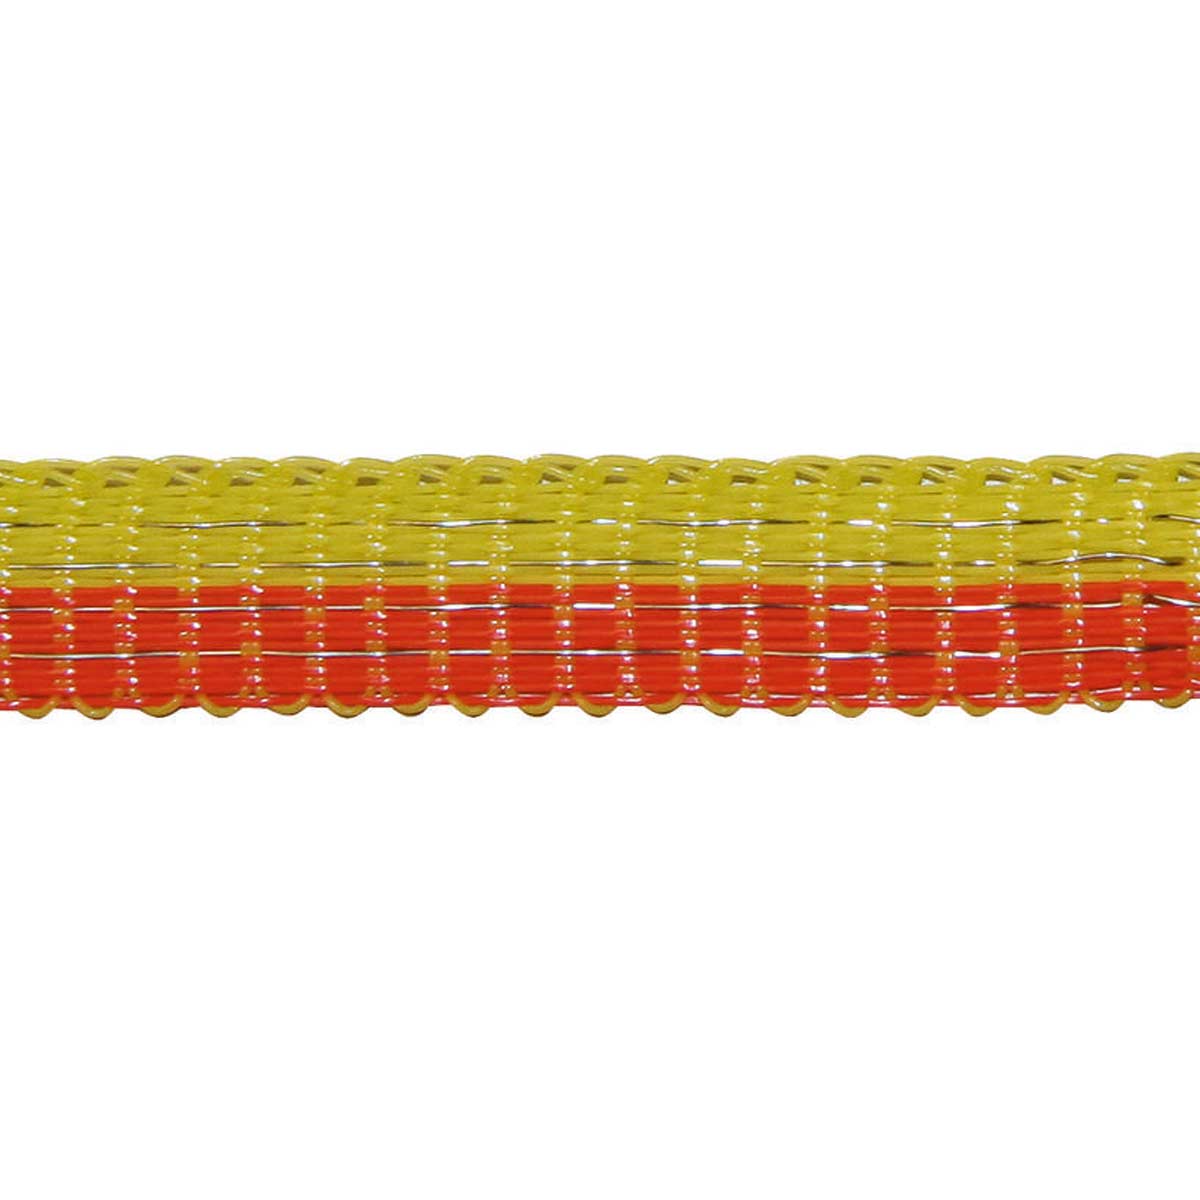 Agrarzone Weidezaunband Basic 10mm, 4x0.16 Niro, gelb-orange 250 m x 10 mm